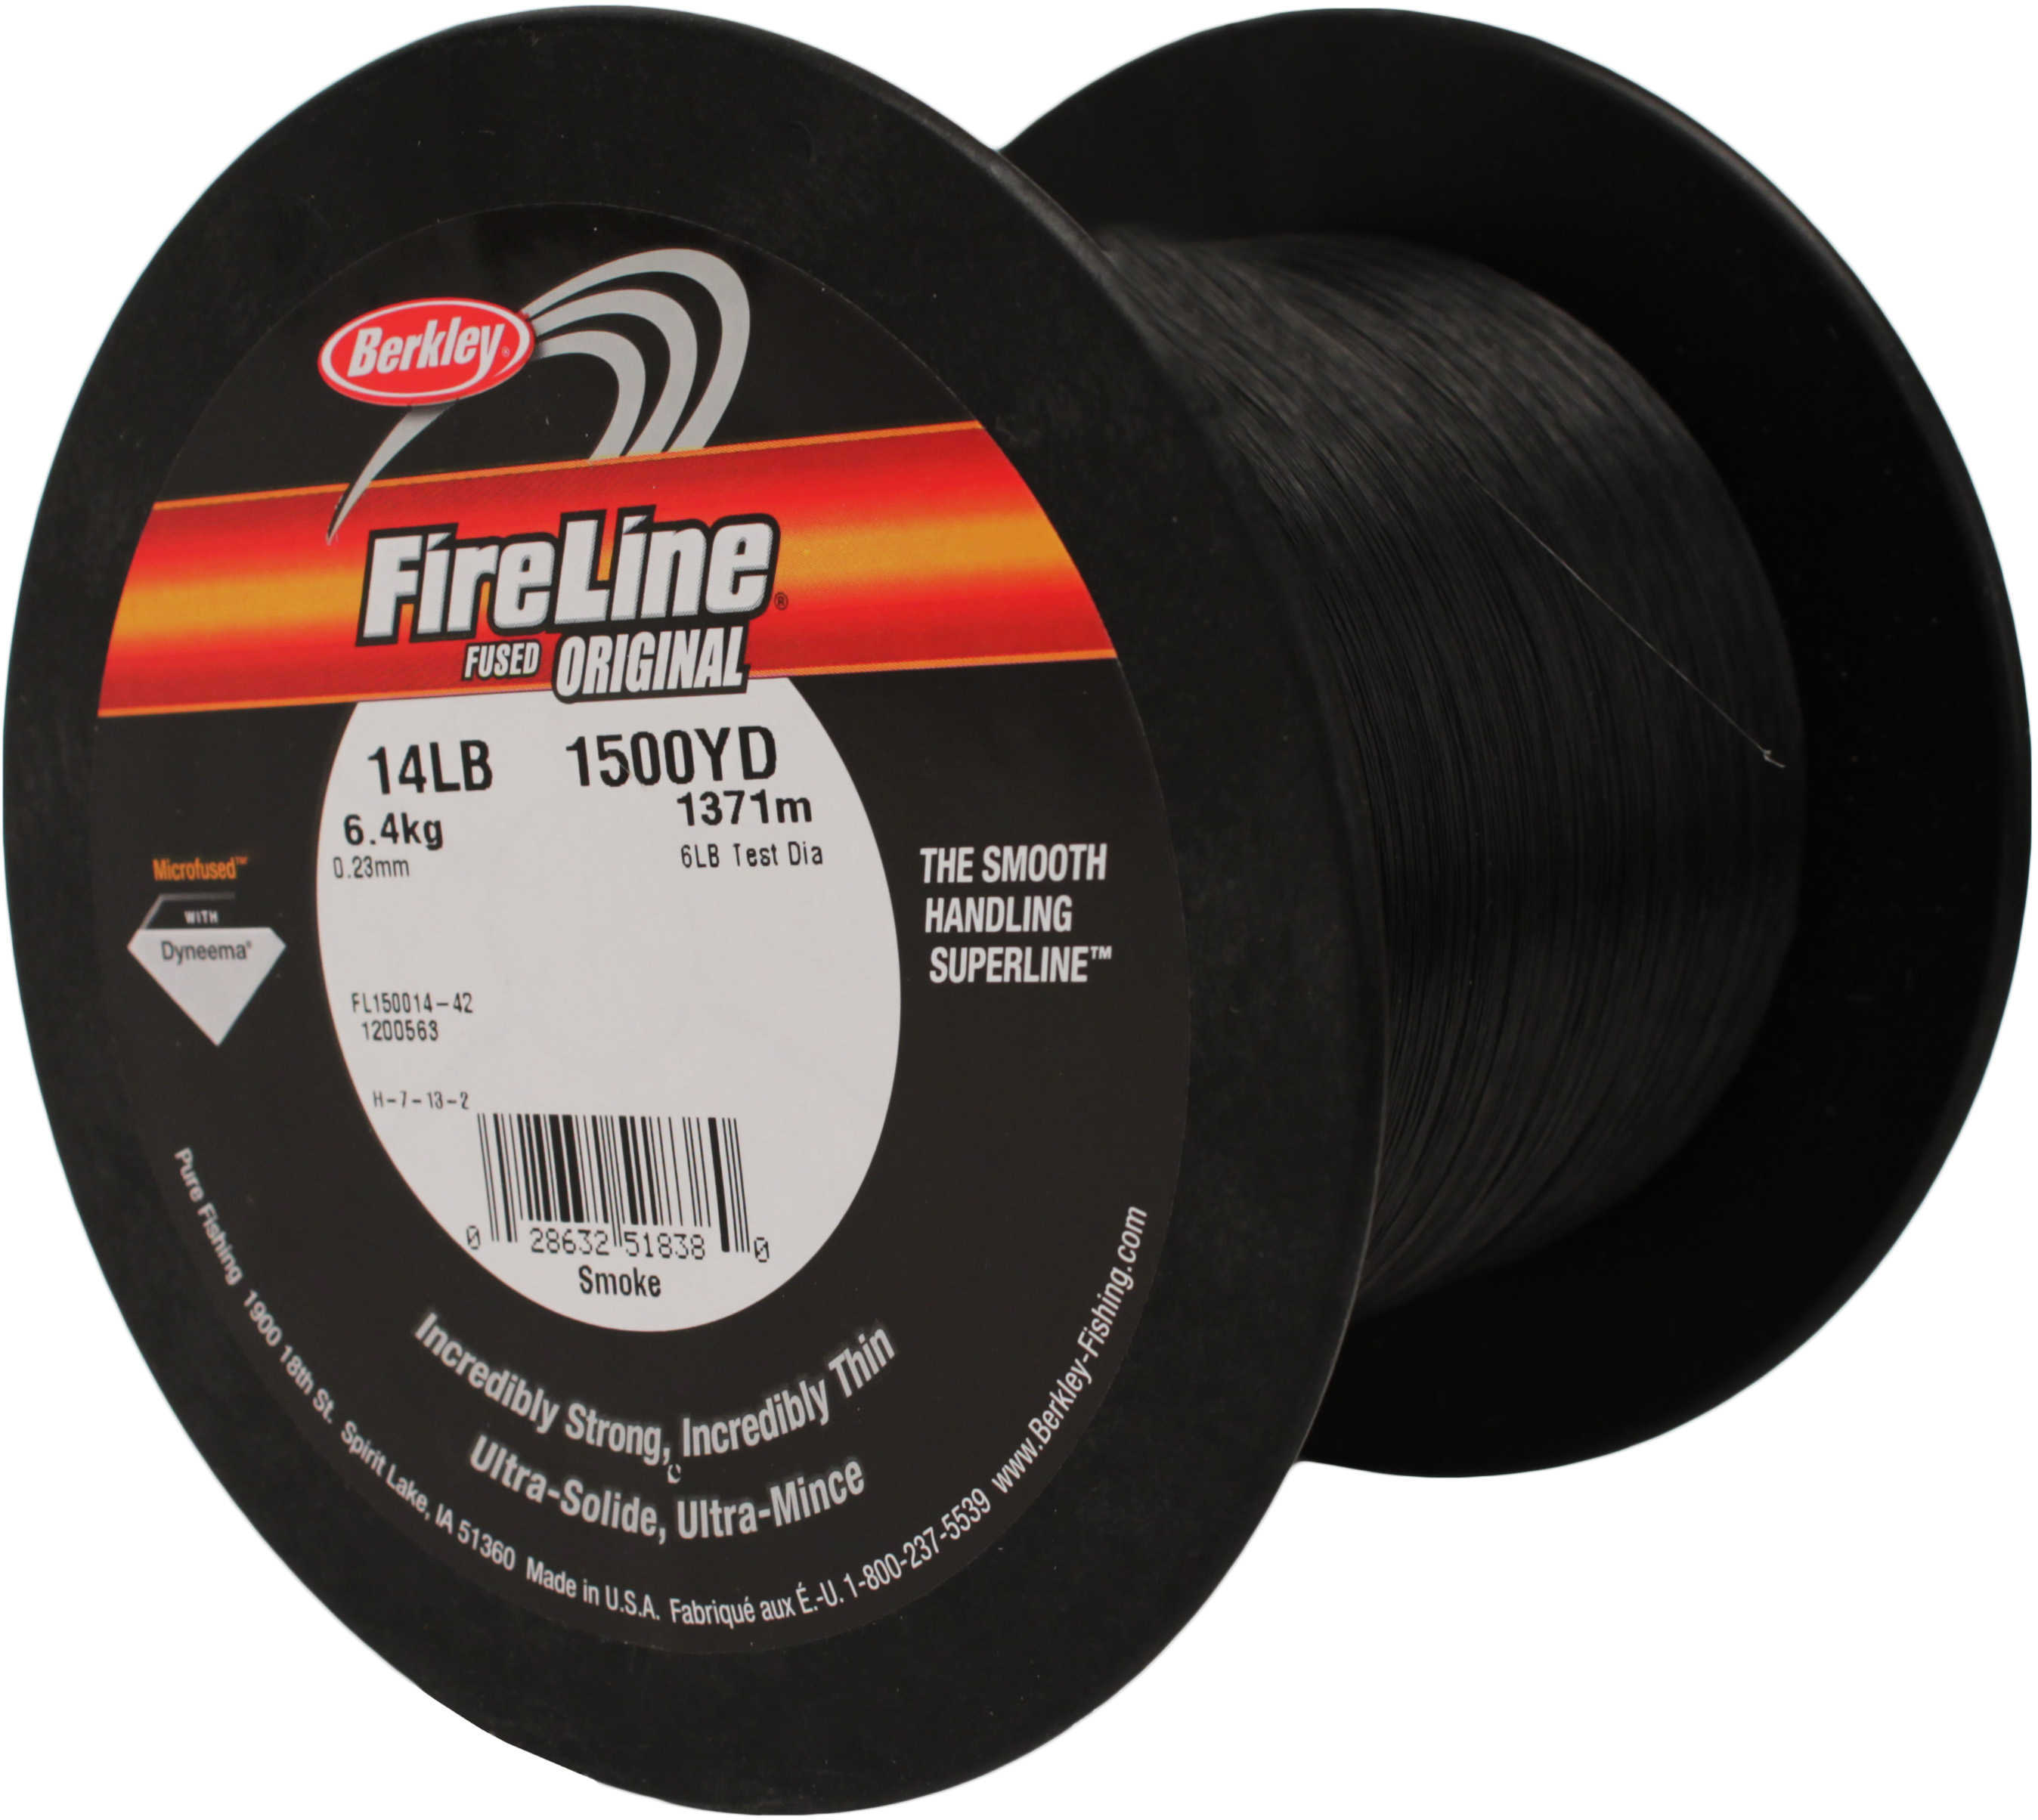 Berkley Fireline Fused Original Line 14 lbs, 1500 Yards , Smoke 1200563